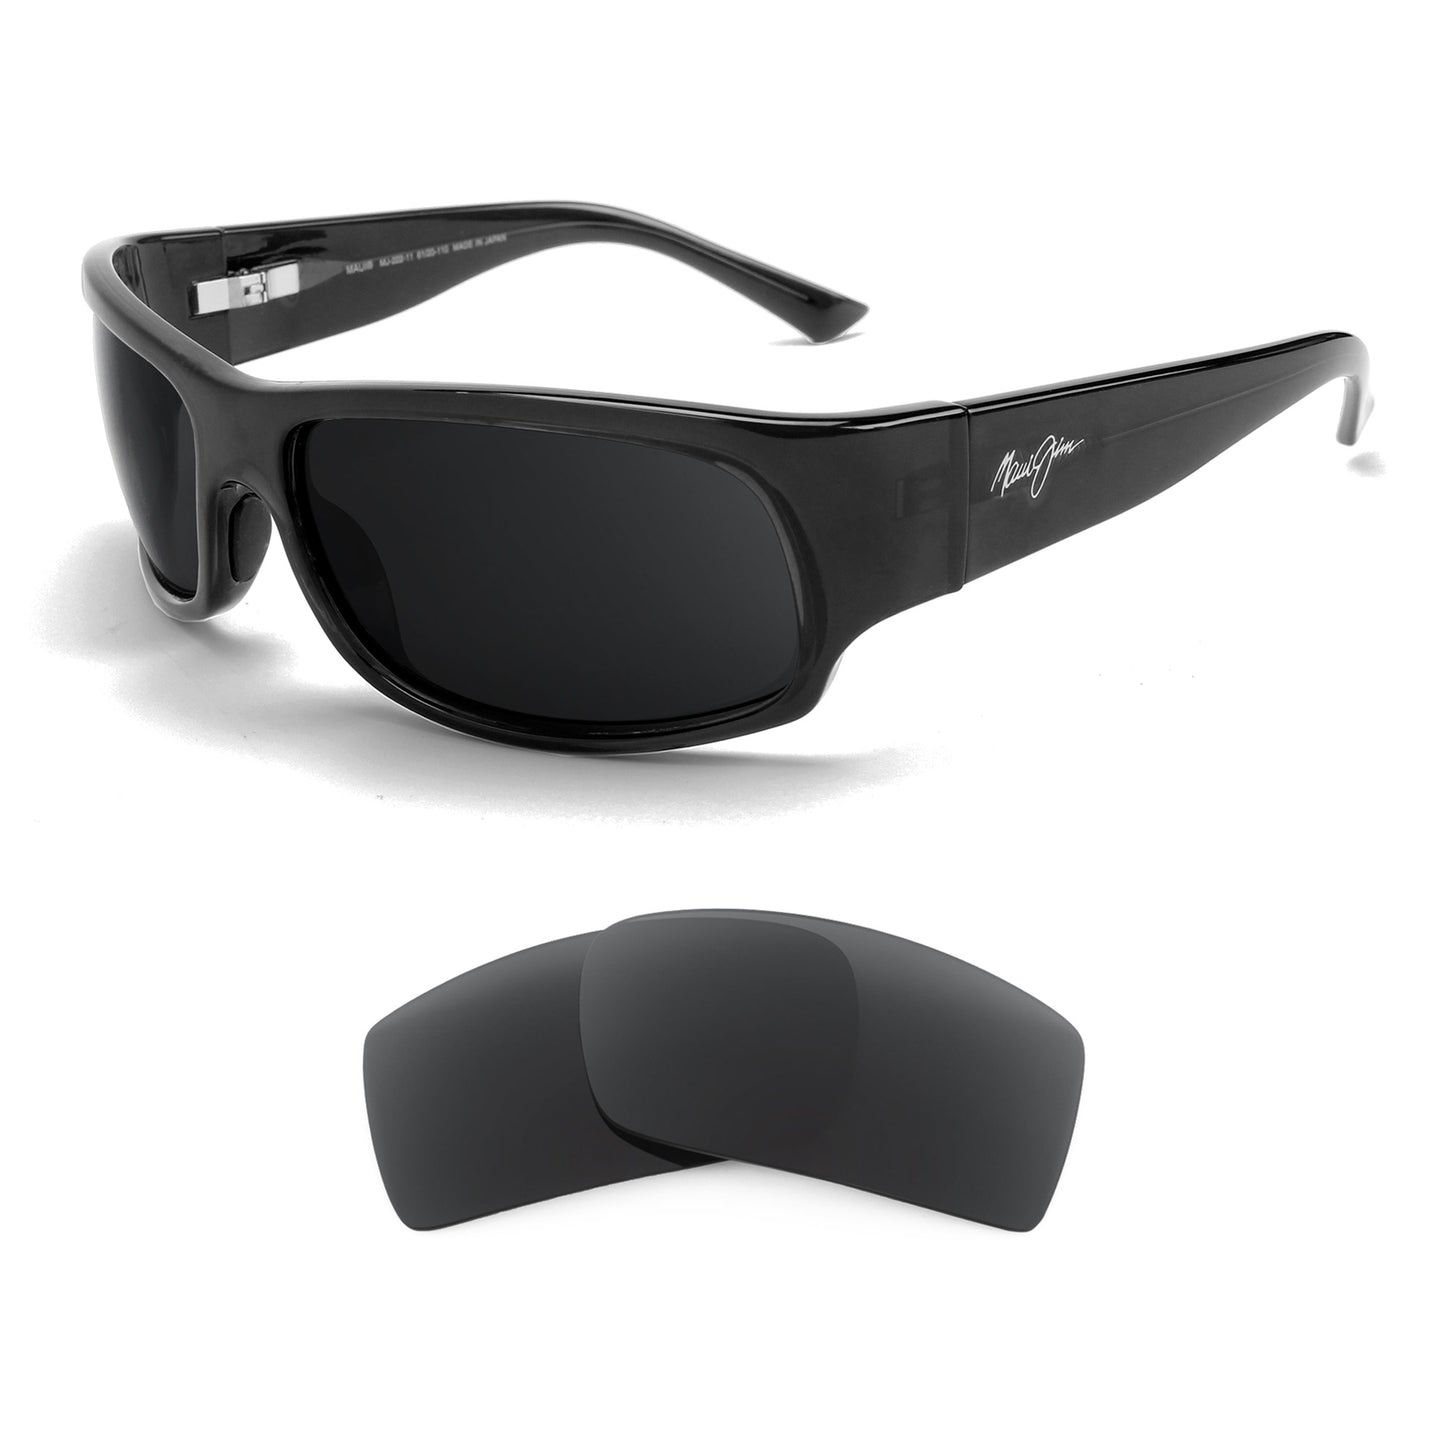 Maui Jim Longboard MJ222 sunglasses with replacement lenses